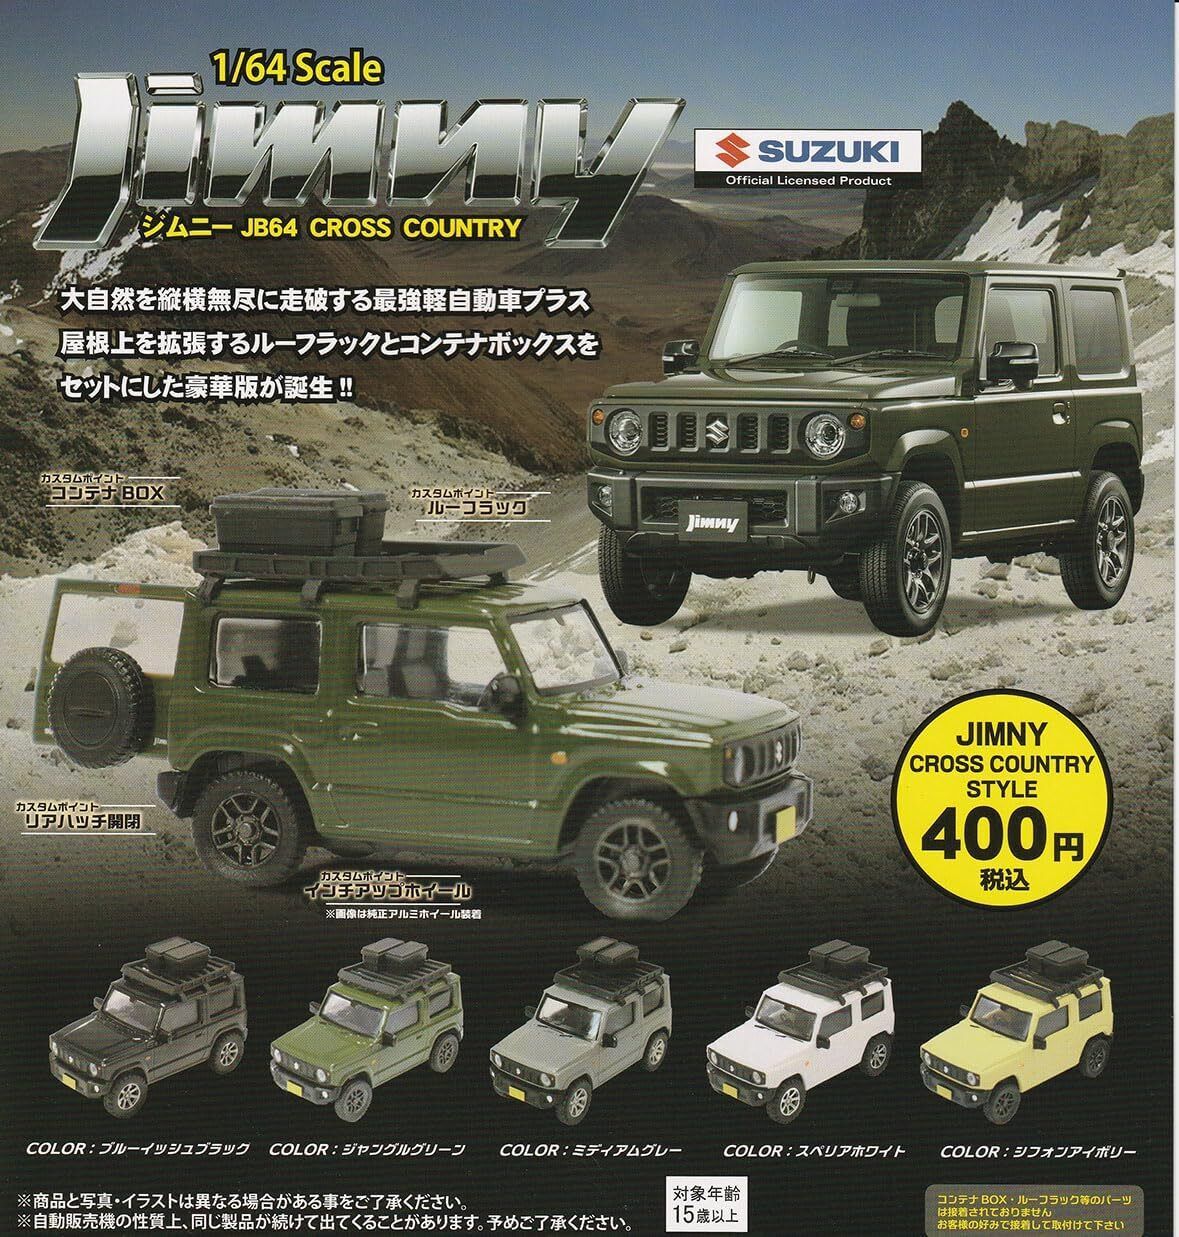 1/64 SUZUKI Jimny JB64 CROSS COUNTRY Full Comp Gacha Gacha Capsule Toy Japan